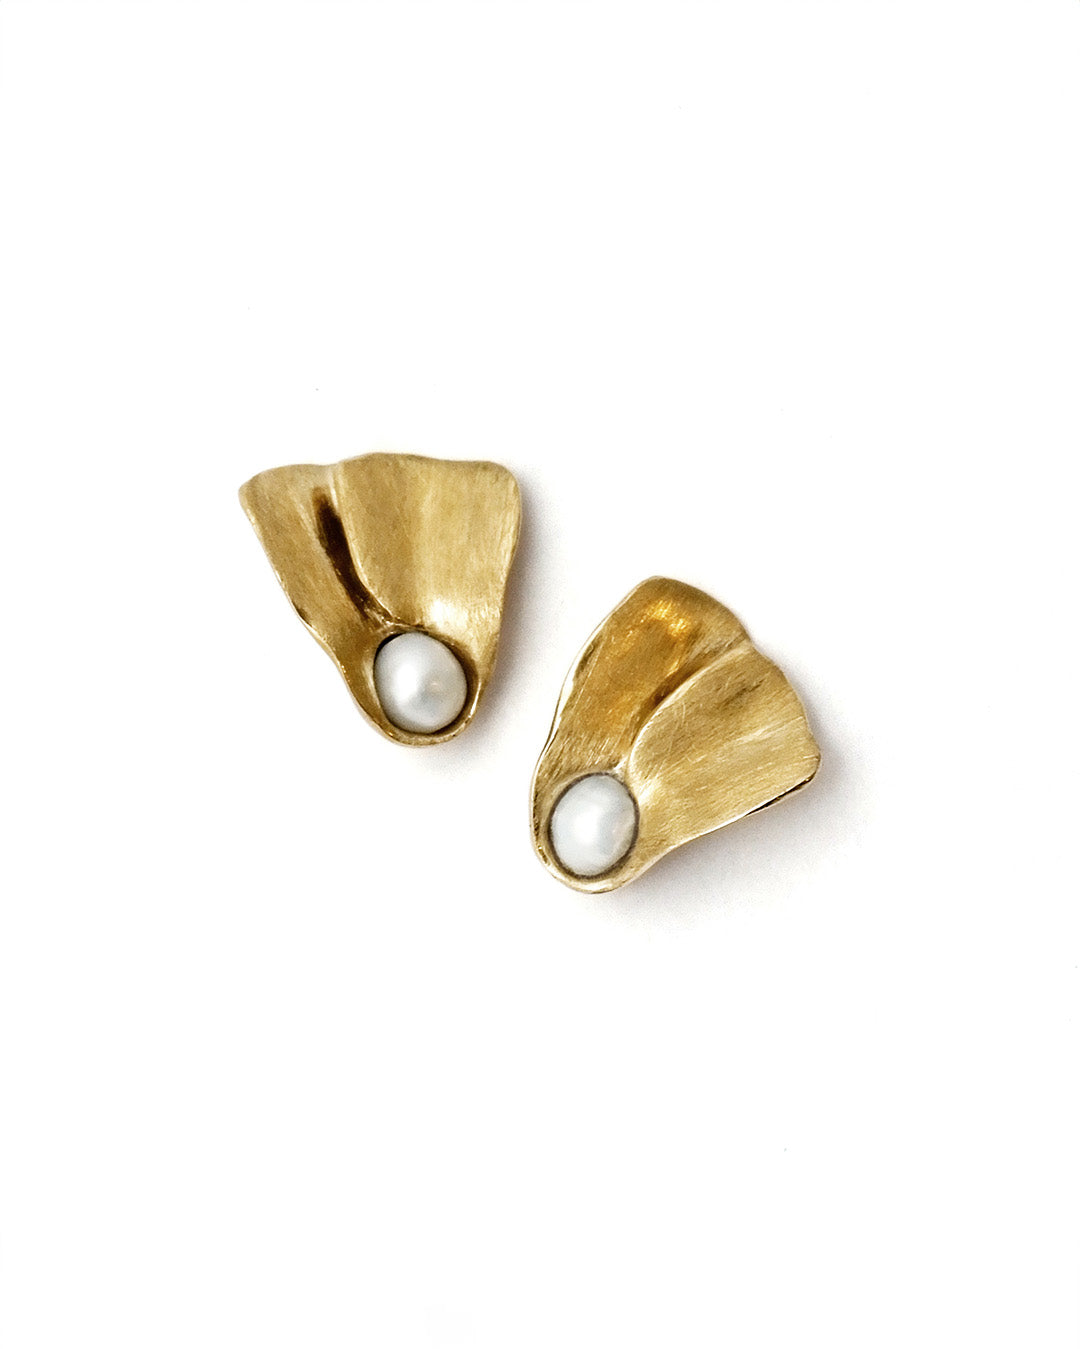 Swirl Bronze and Pearl Earrings